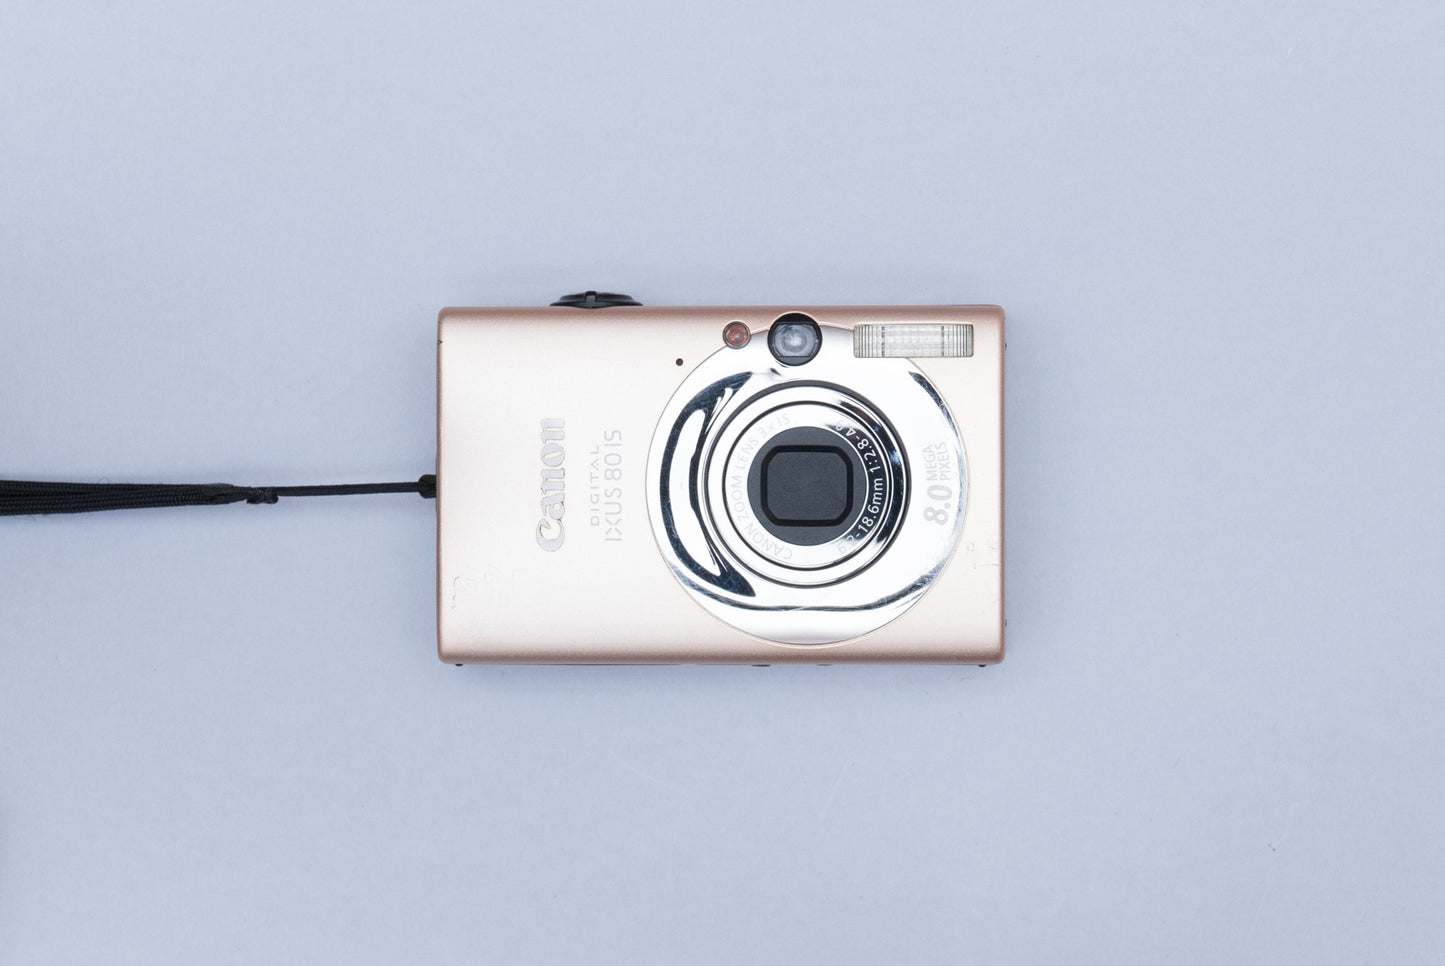 Canon IXUS 80 IS Compact Digital Camera